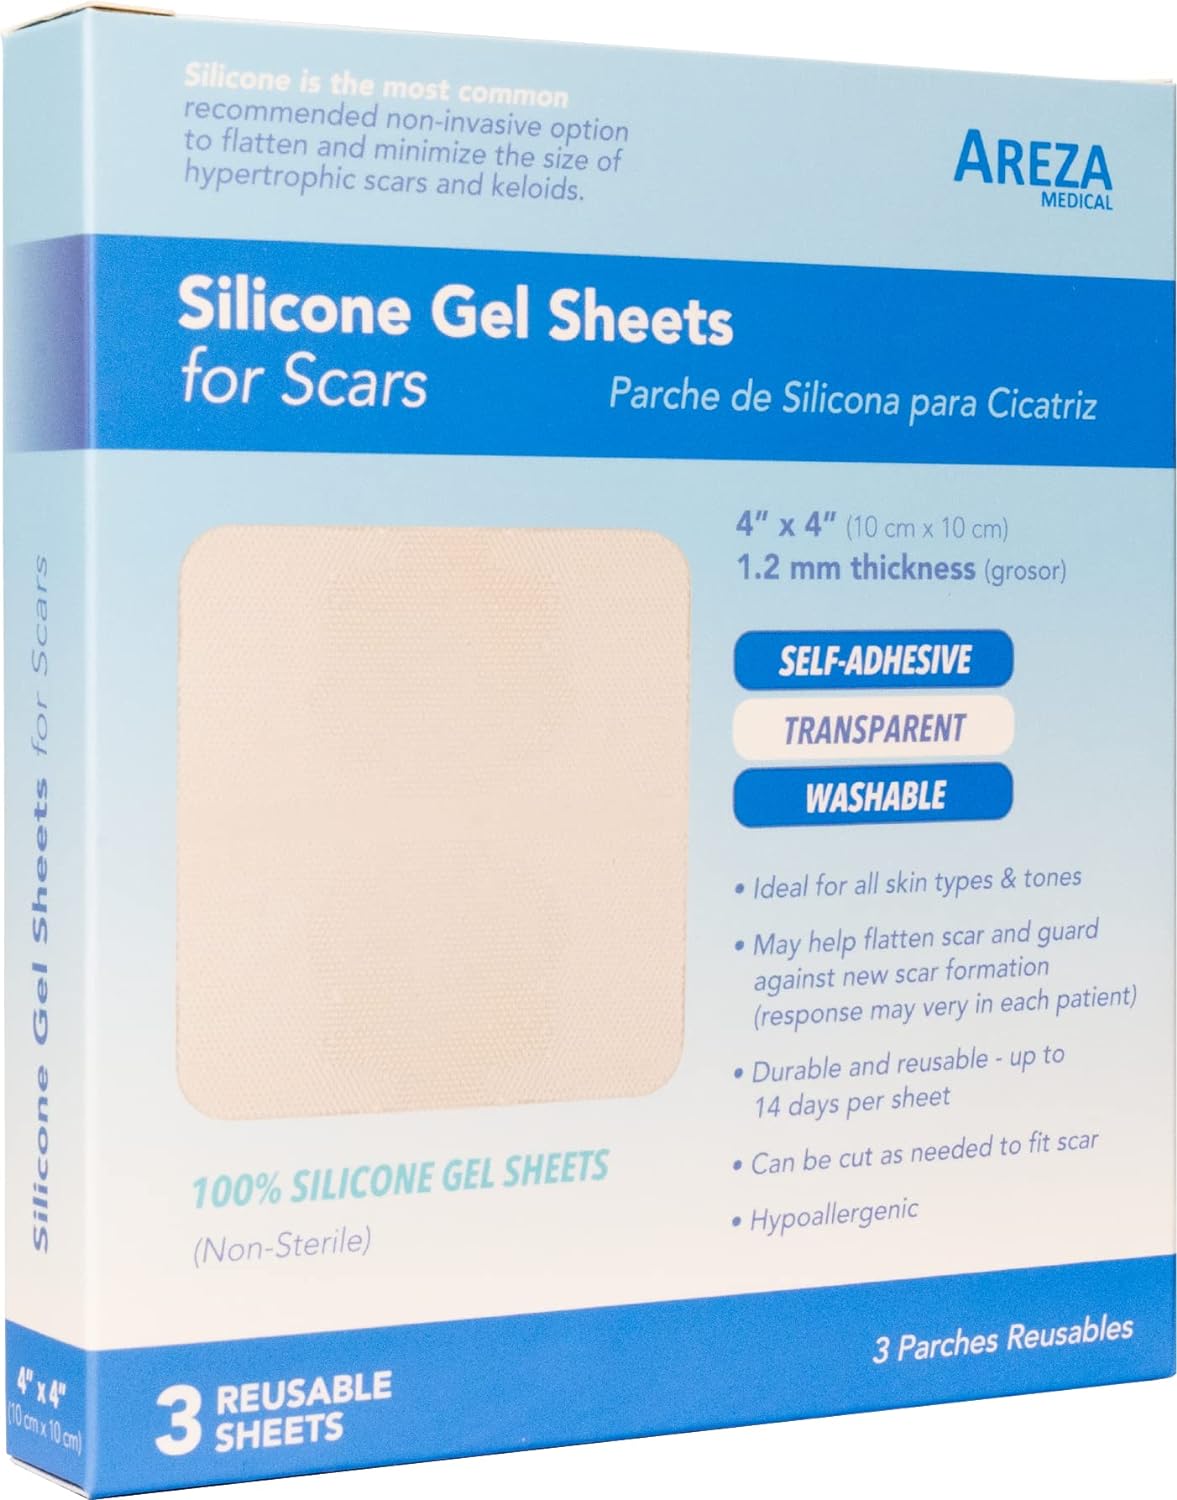 Areza Medical Silicone Gel Sheets for Scars, 4" x 4", 3 Sheets per Box, Medical Grade Sili